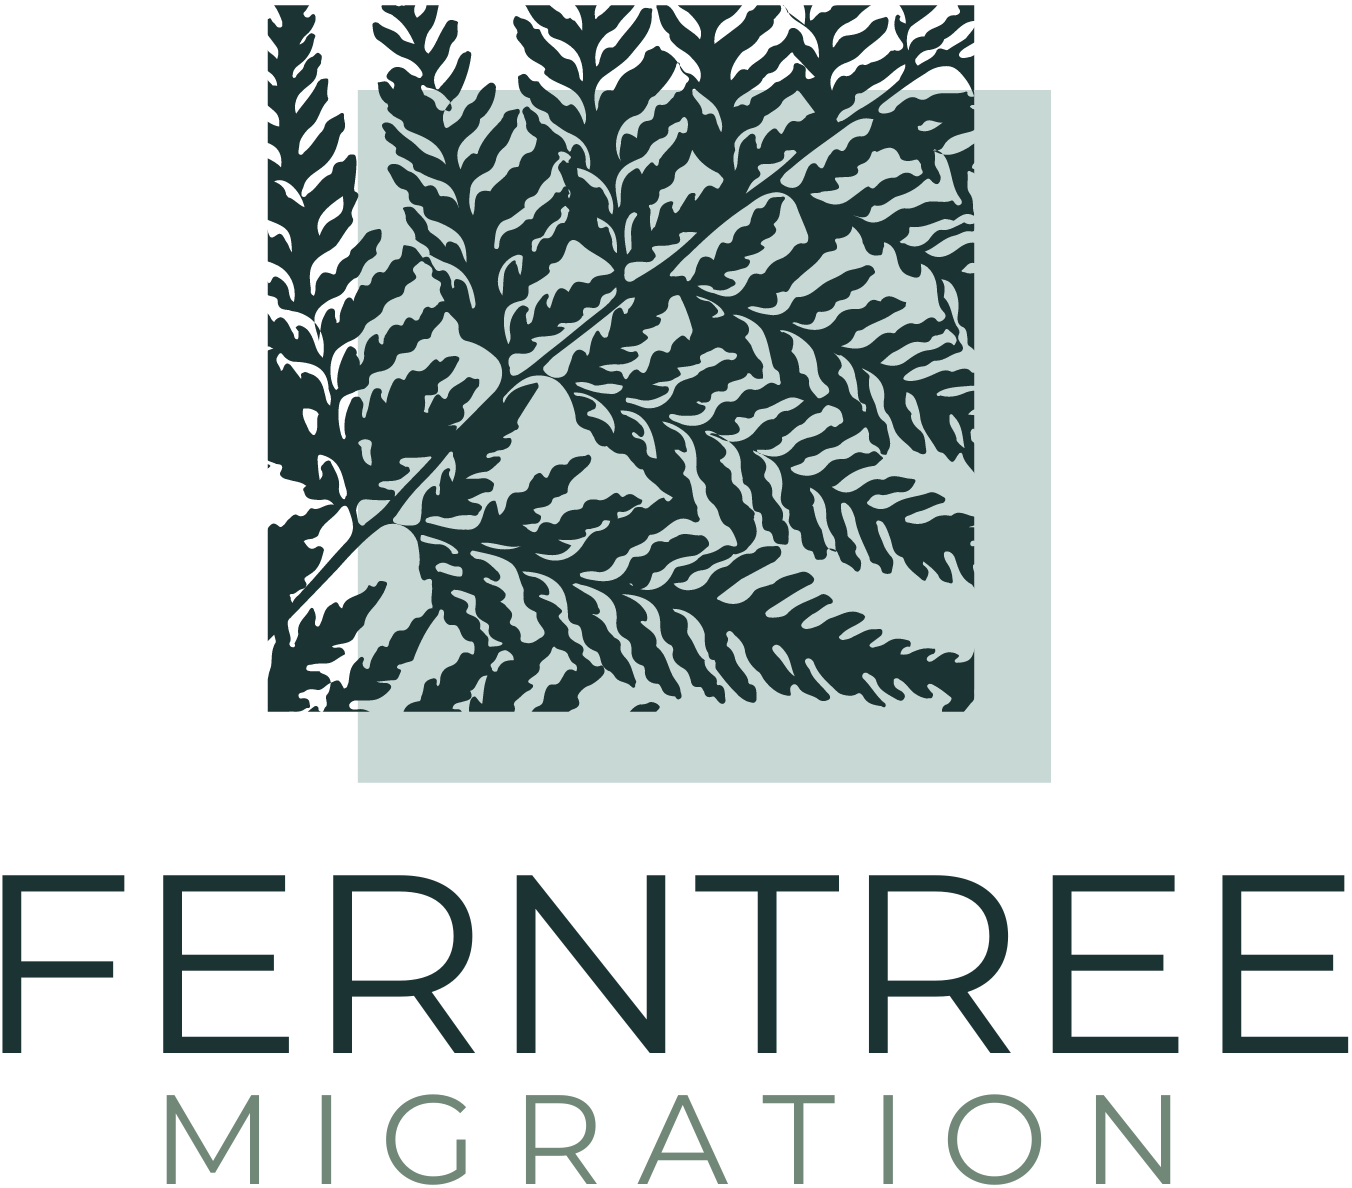 Ferntree Migration